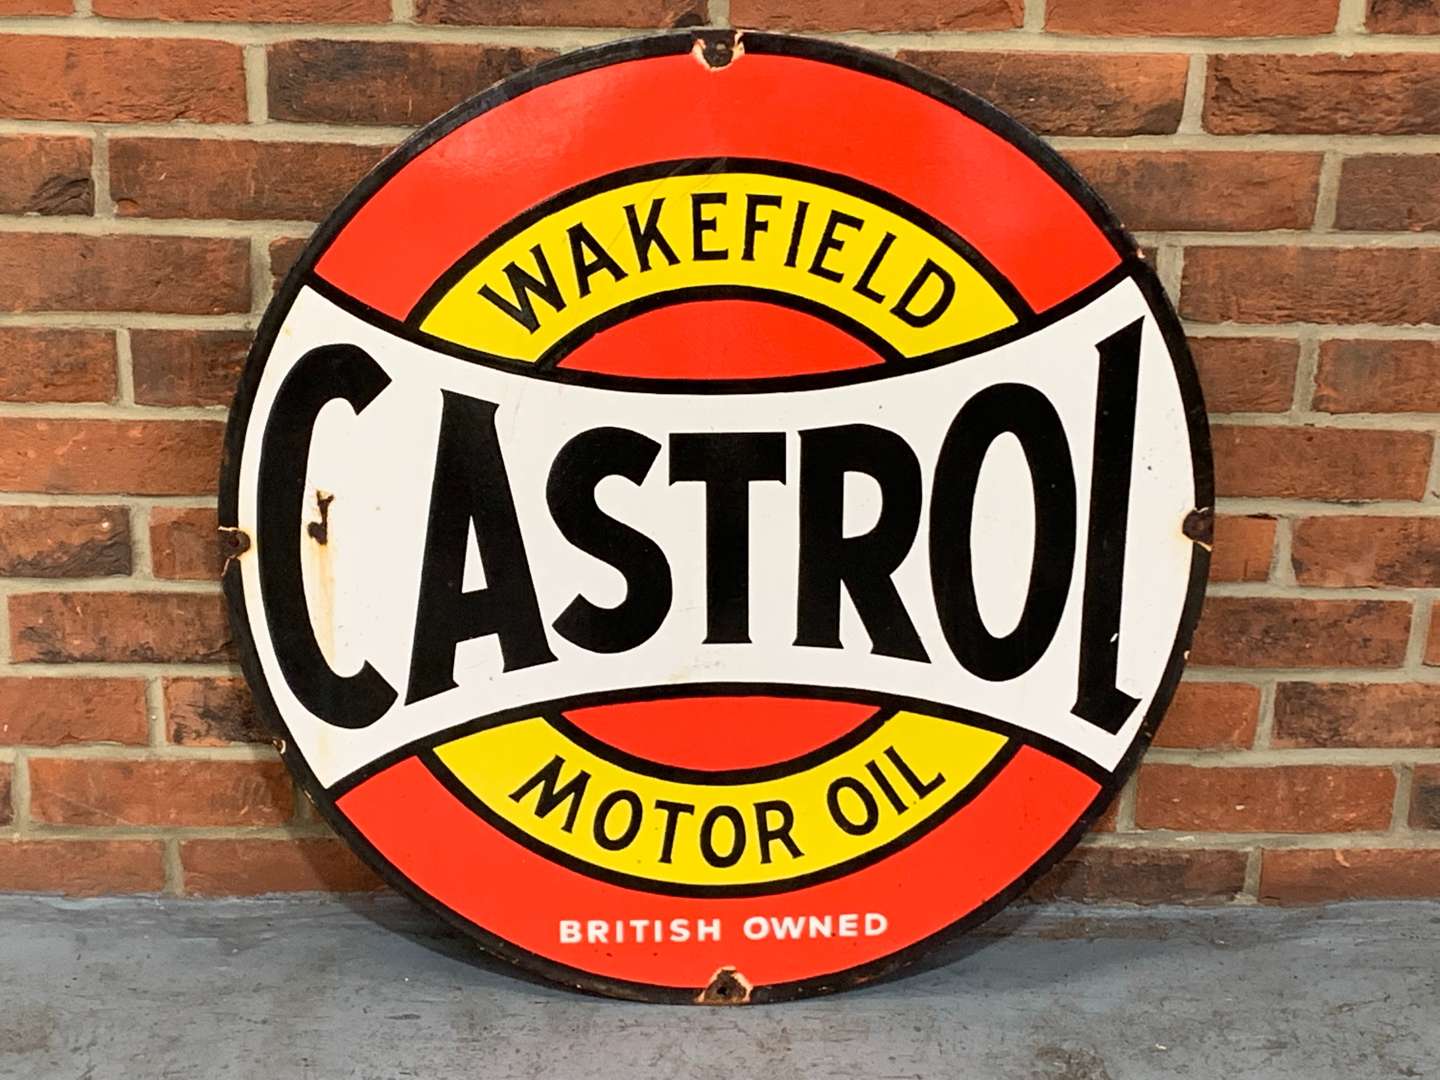 <p>Castrol Wakefield Motor Oil Circular Enamel Sign</p>